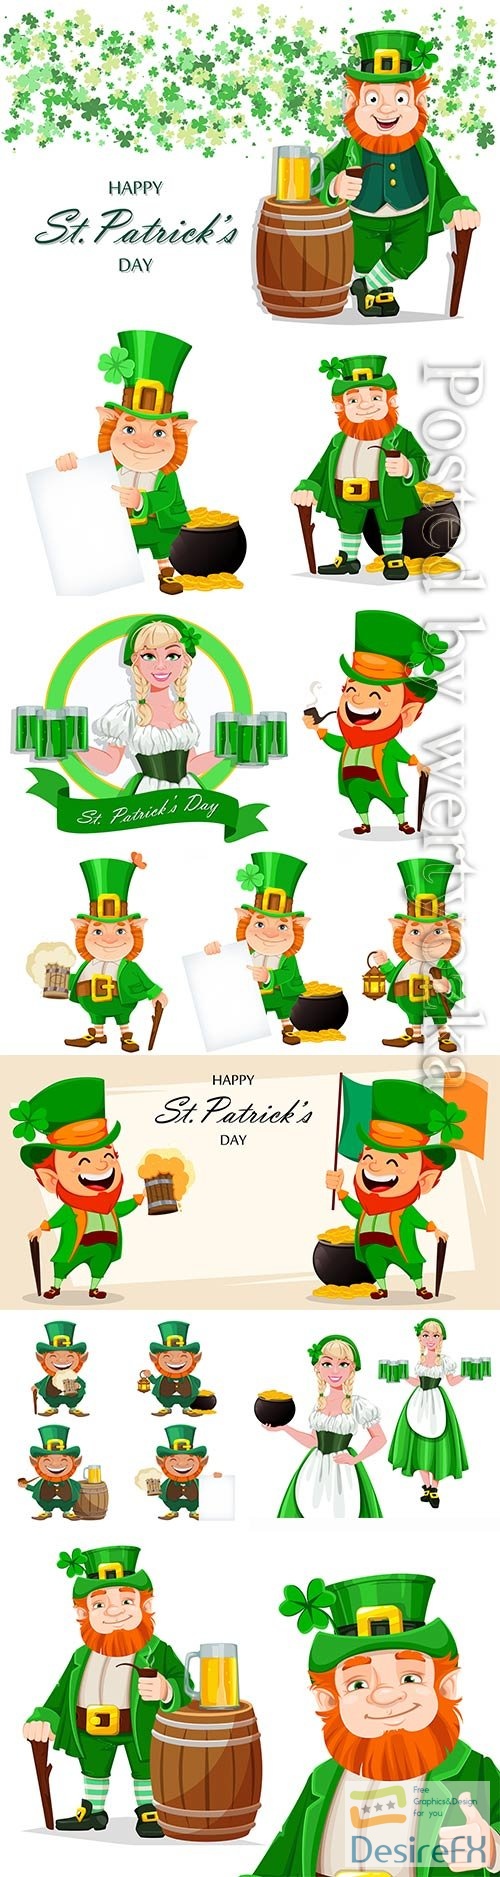 Leprechaun cartoon character, saint patricks day